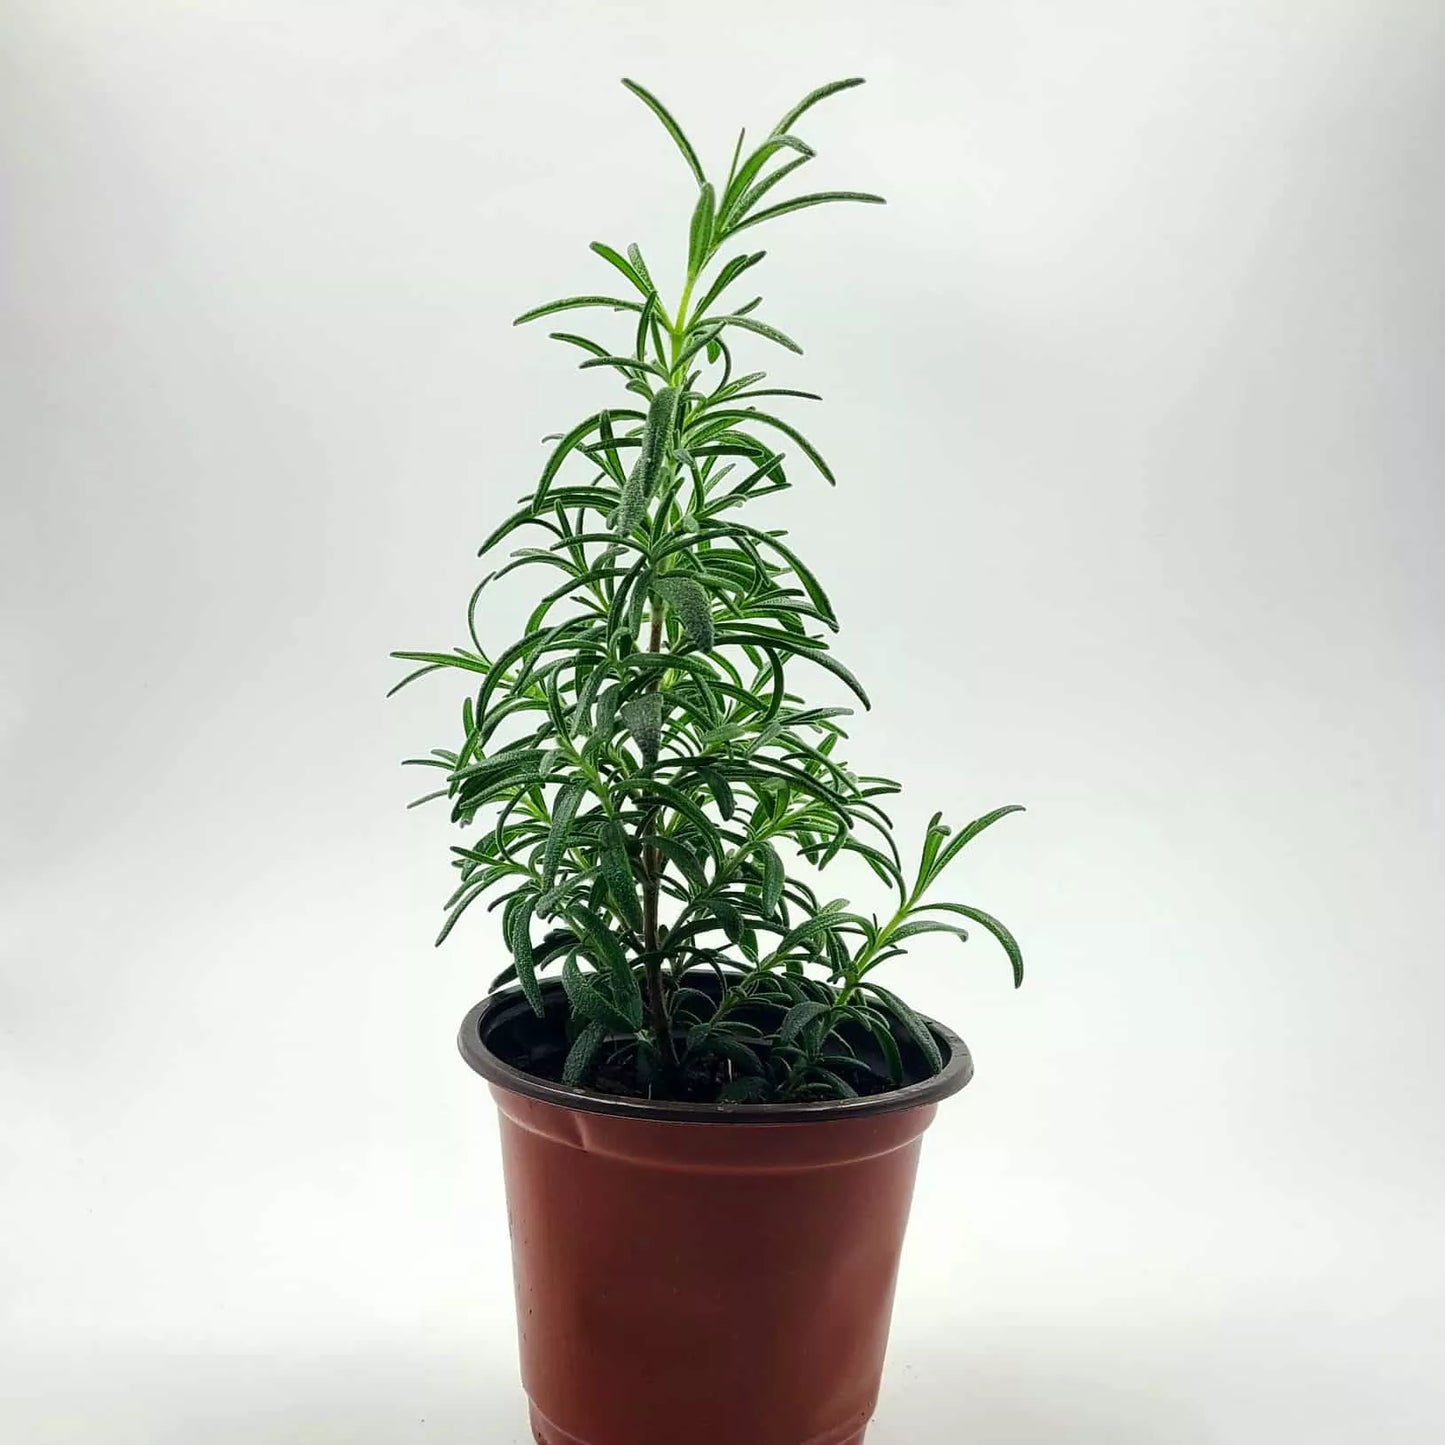 Herb plant